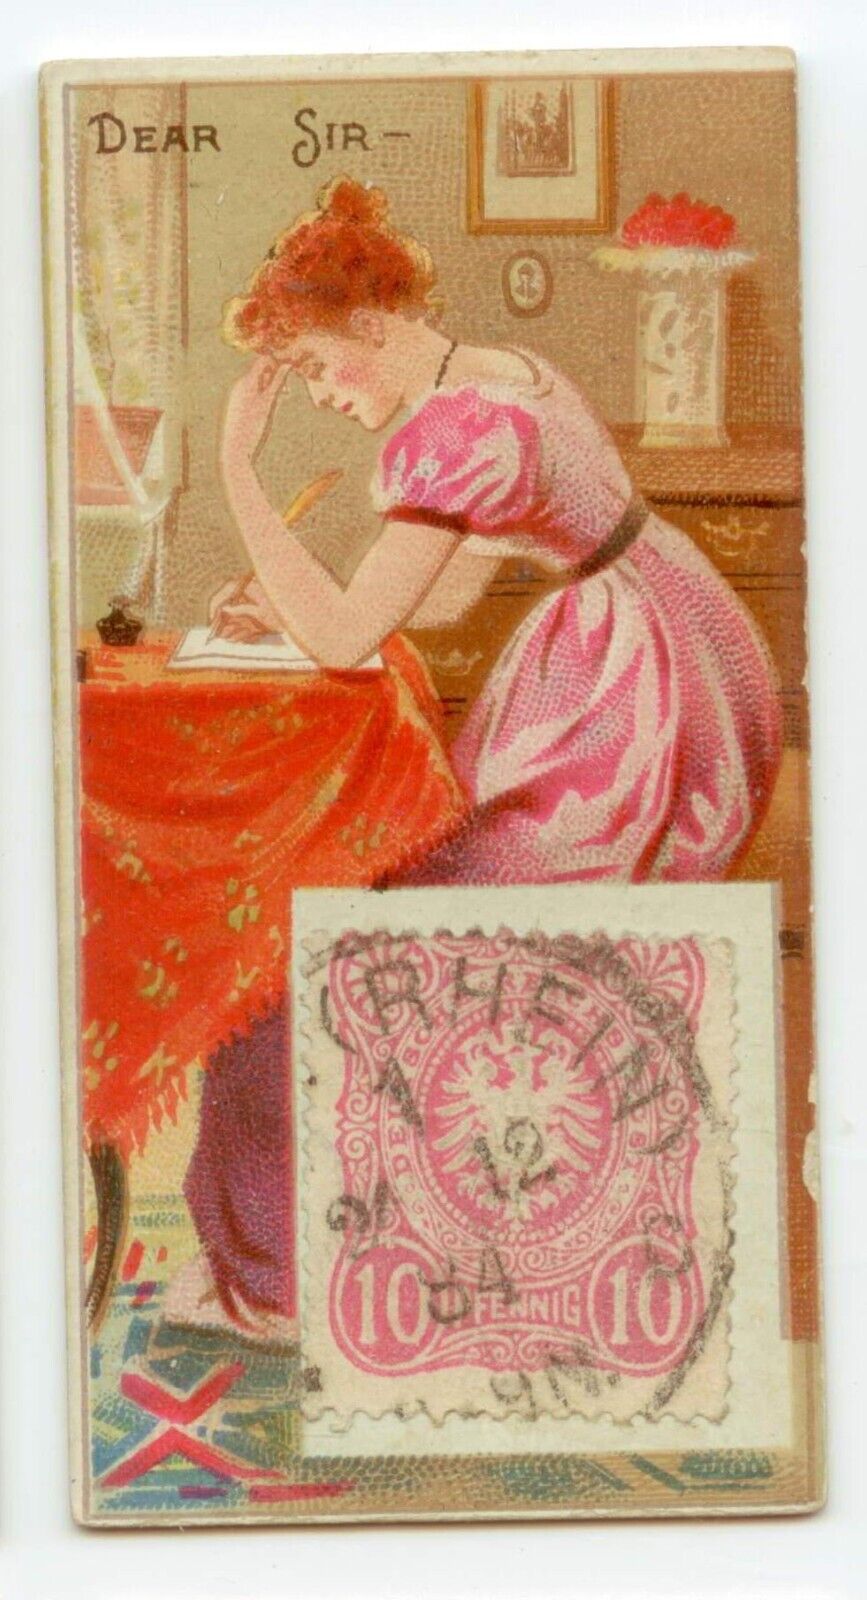 c1889 Duke's Postage Stamp card - Dear Sir - Germany stamp